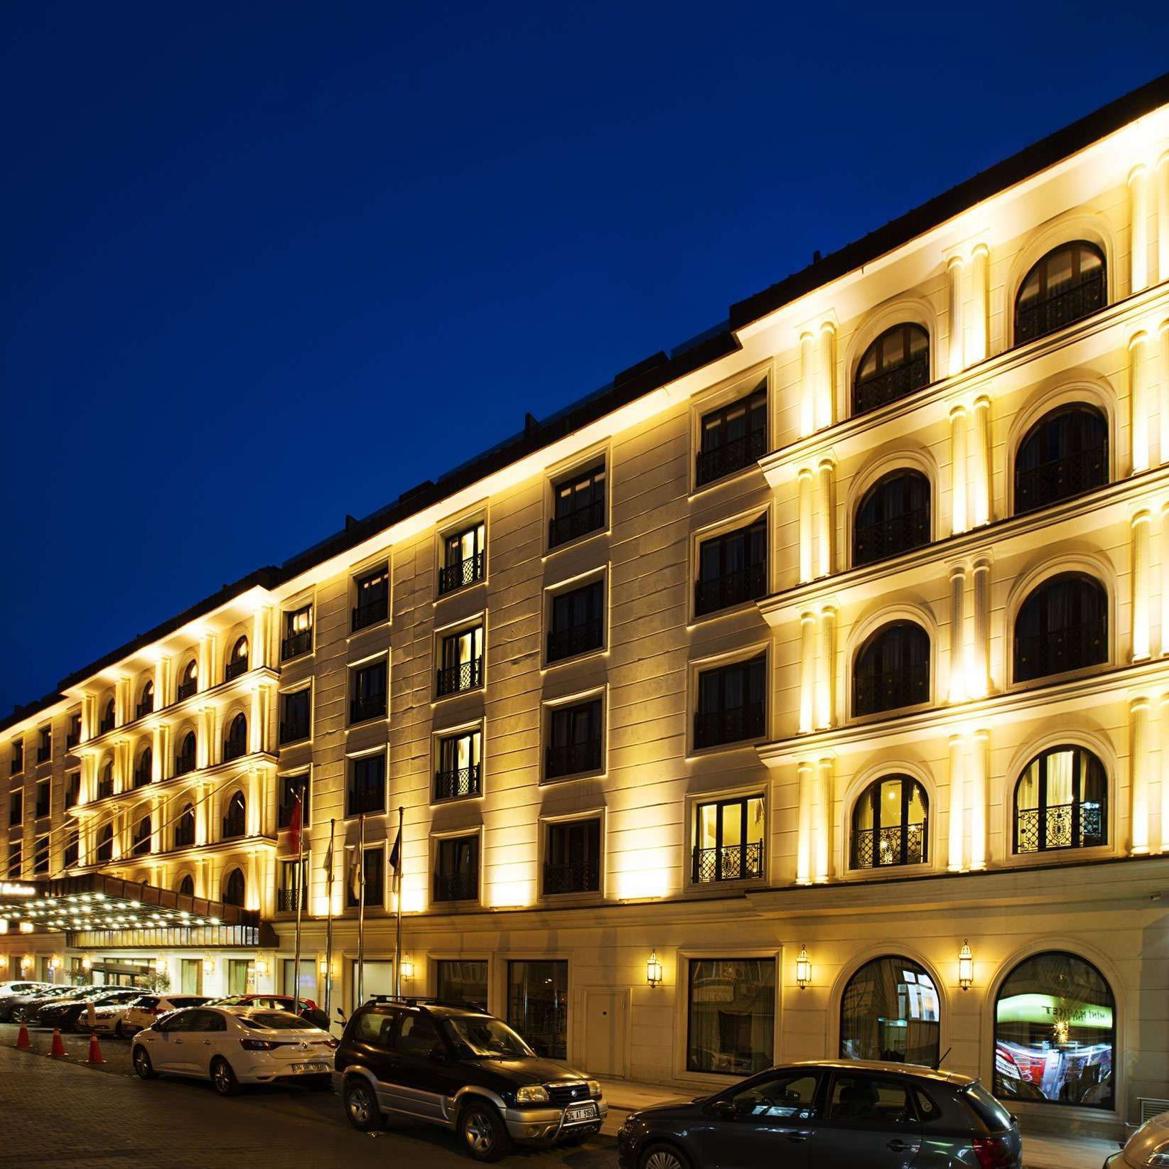 Ottoman's Life Hotel Deluxe bekdas hotel deluxe